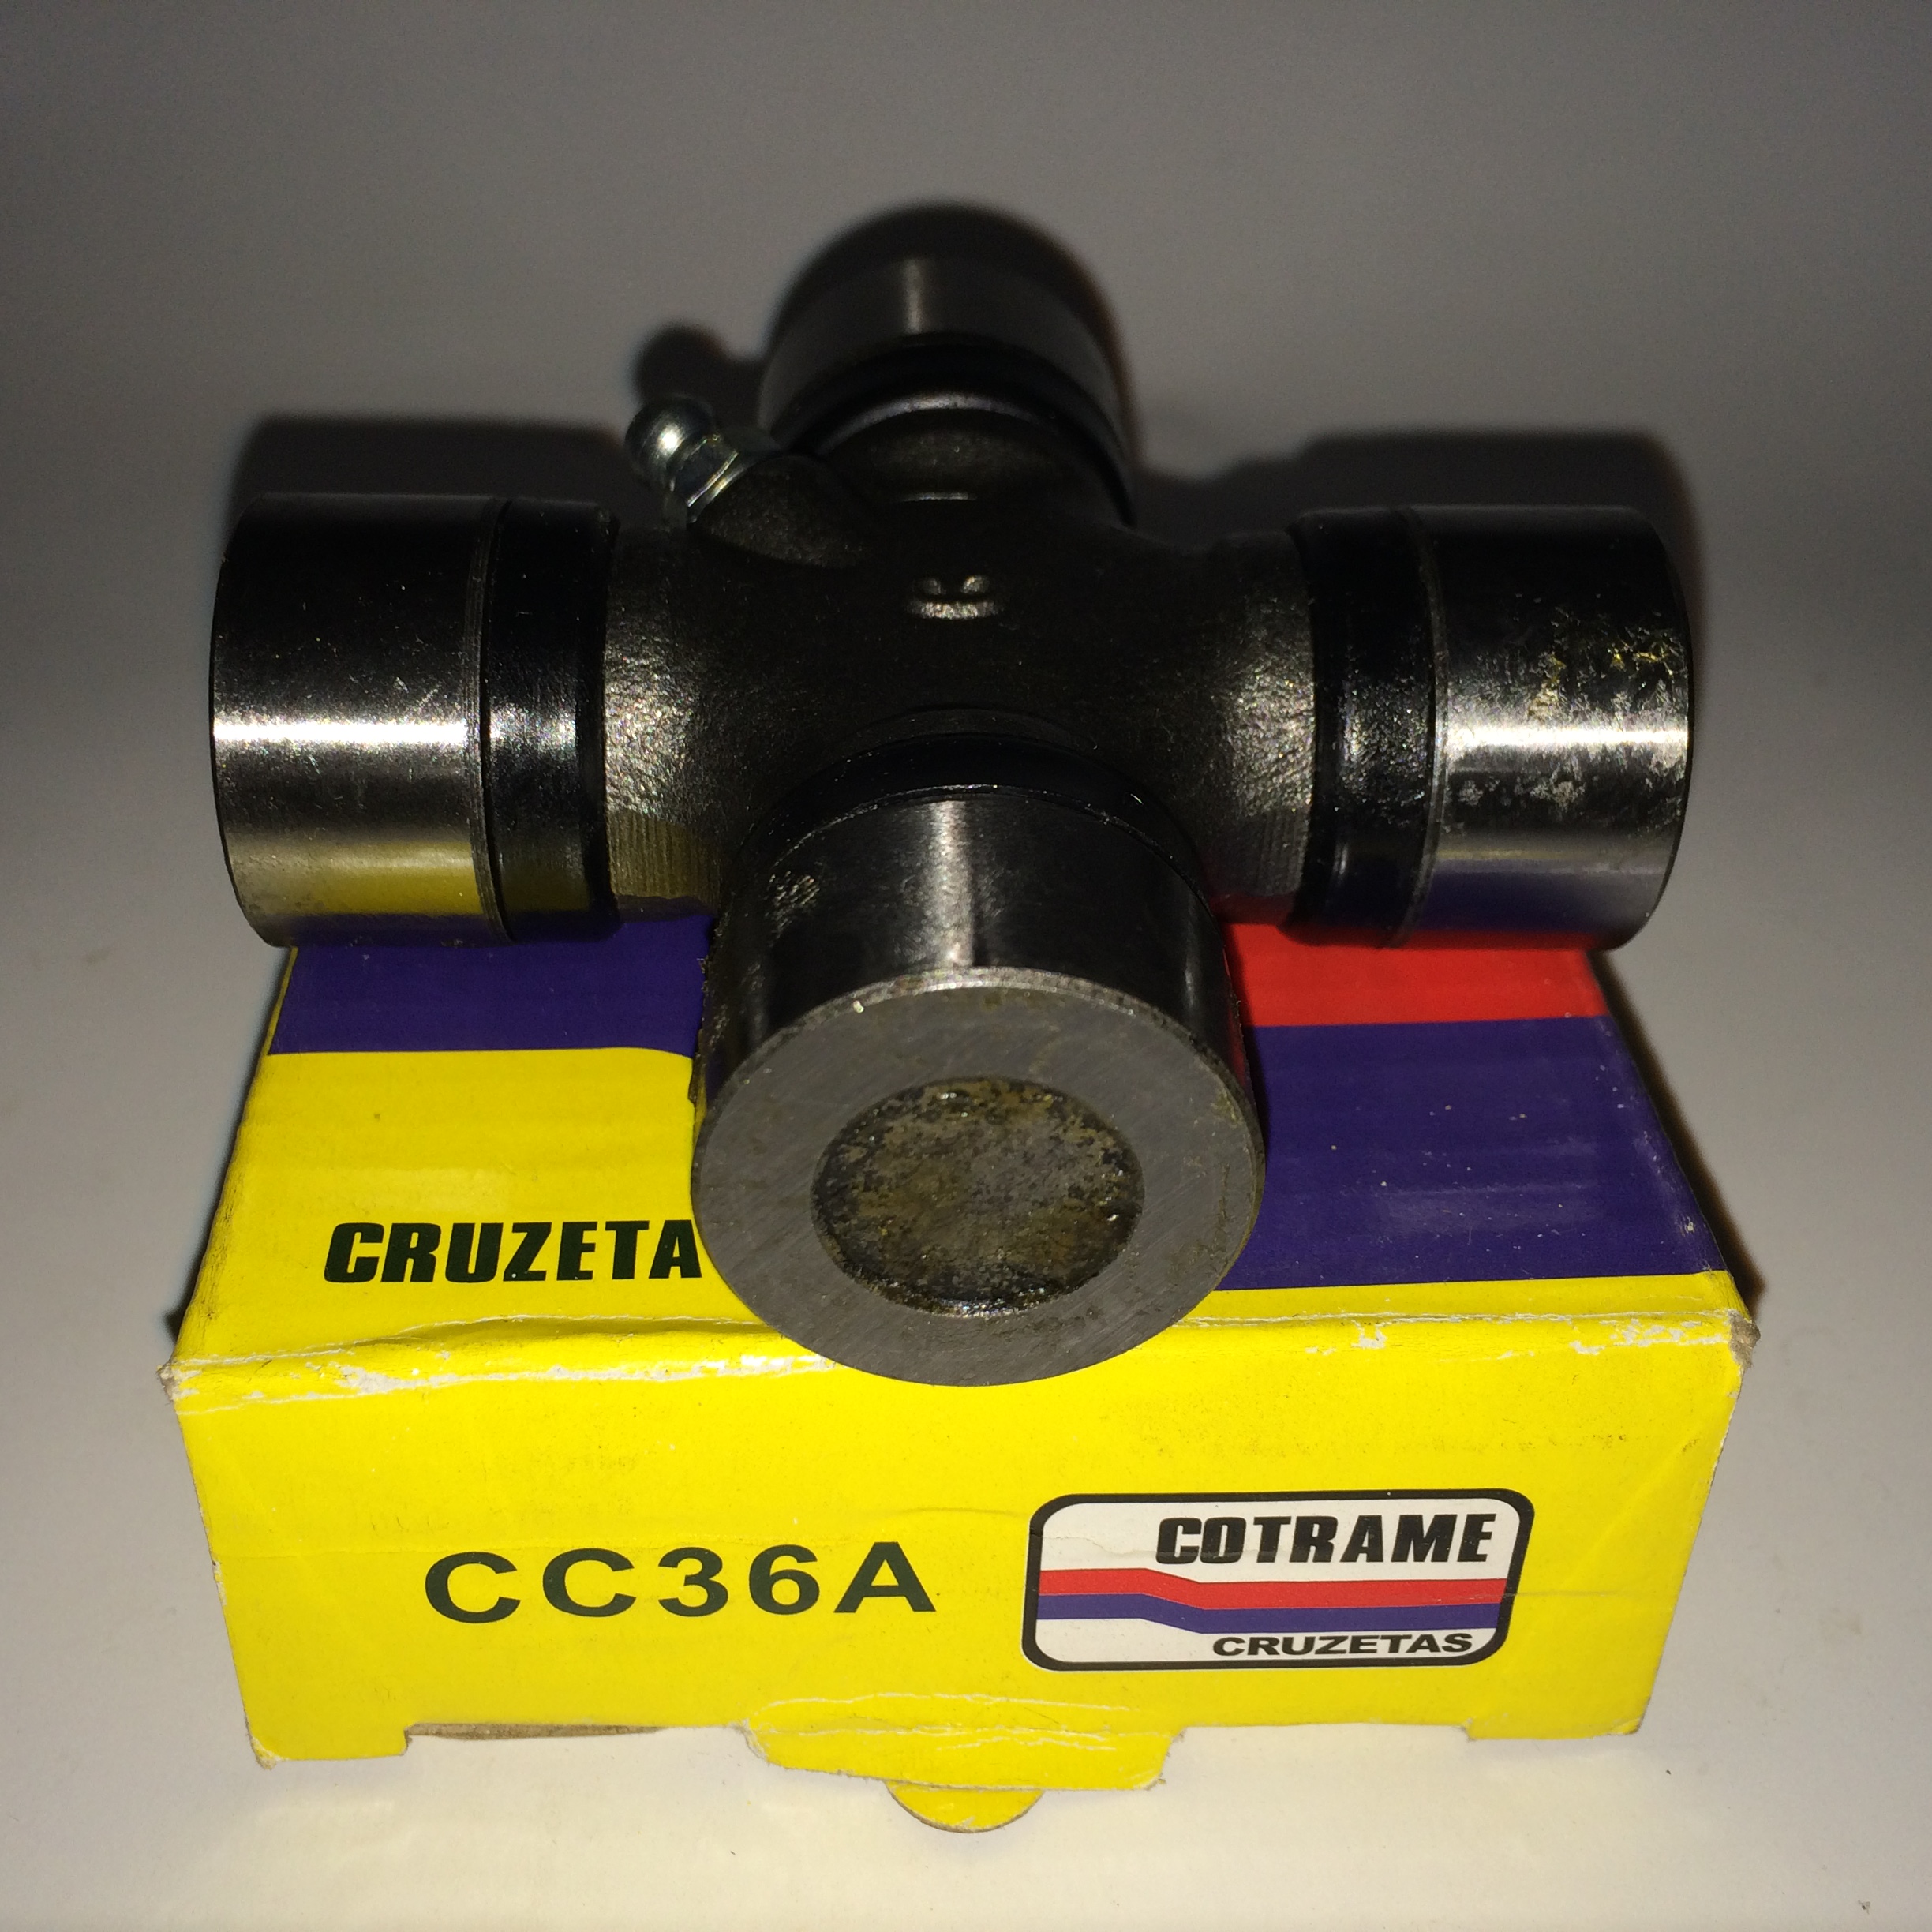 CRUZETA CC-36 A